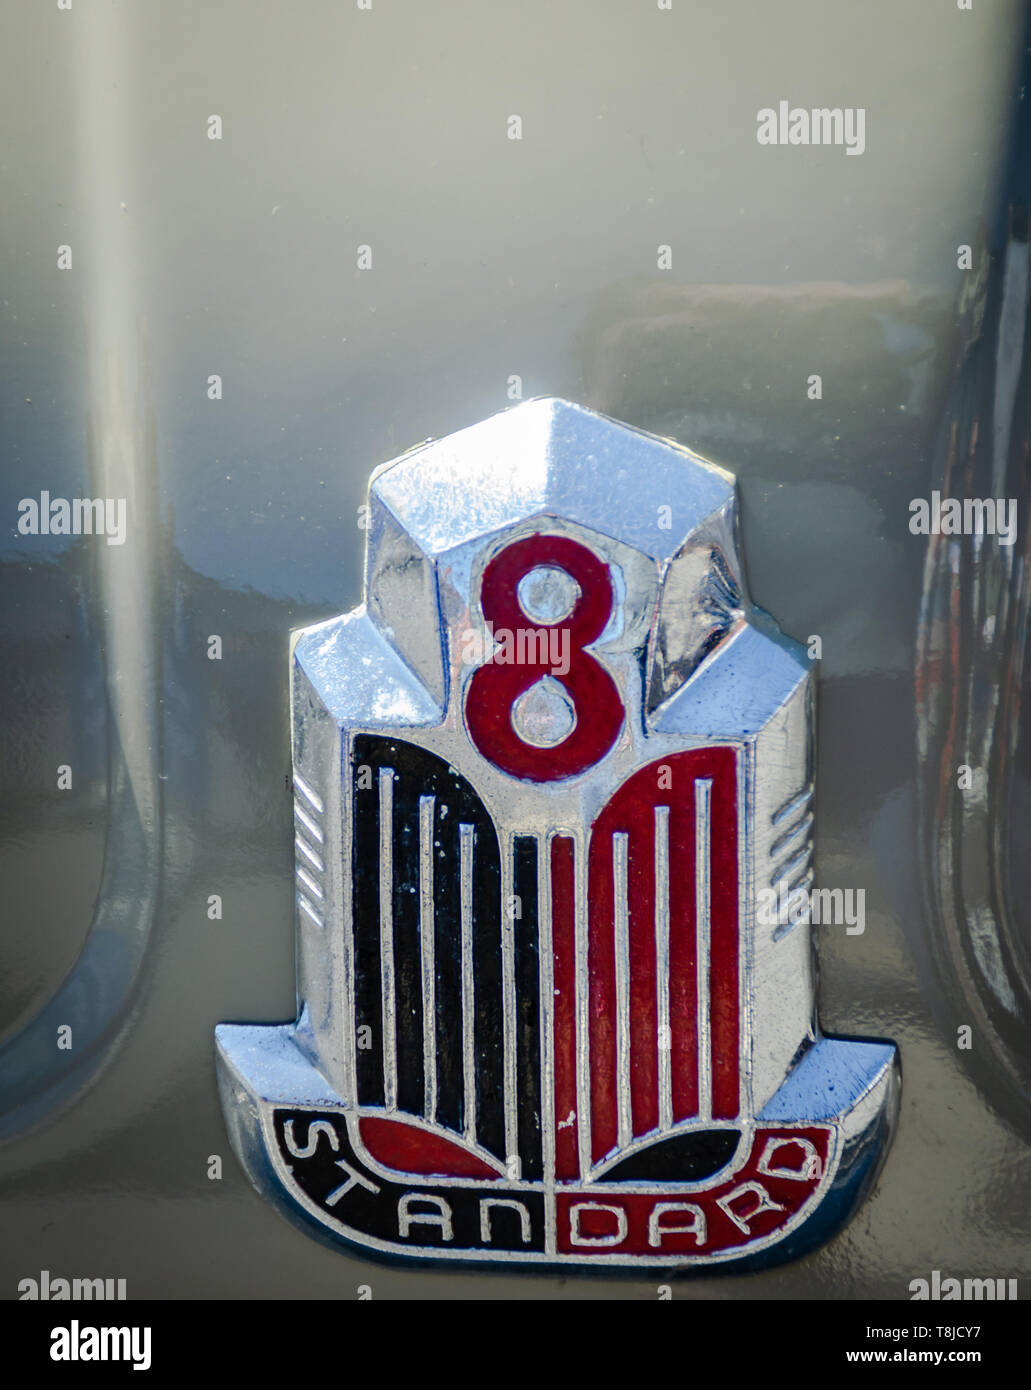 Standard 8 Car badge Stock Photo